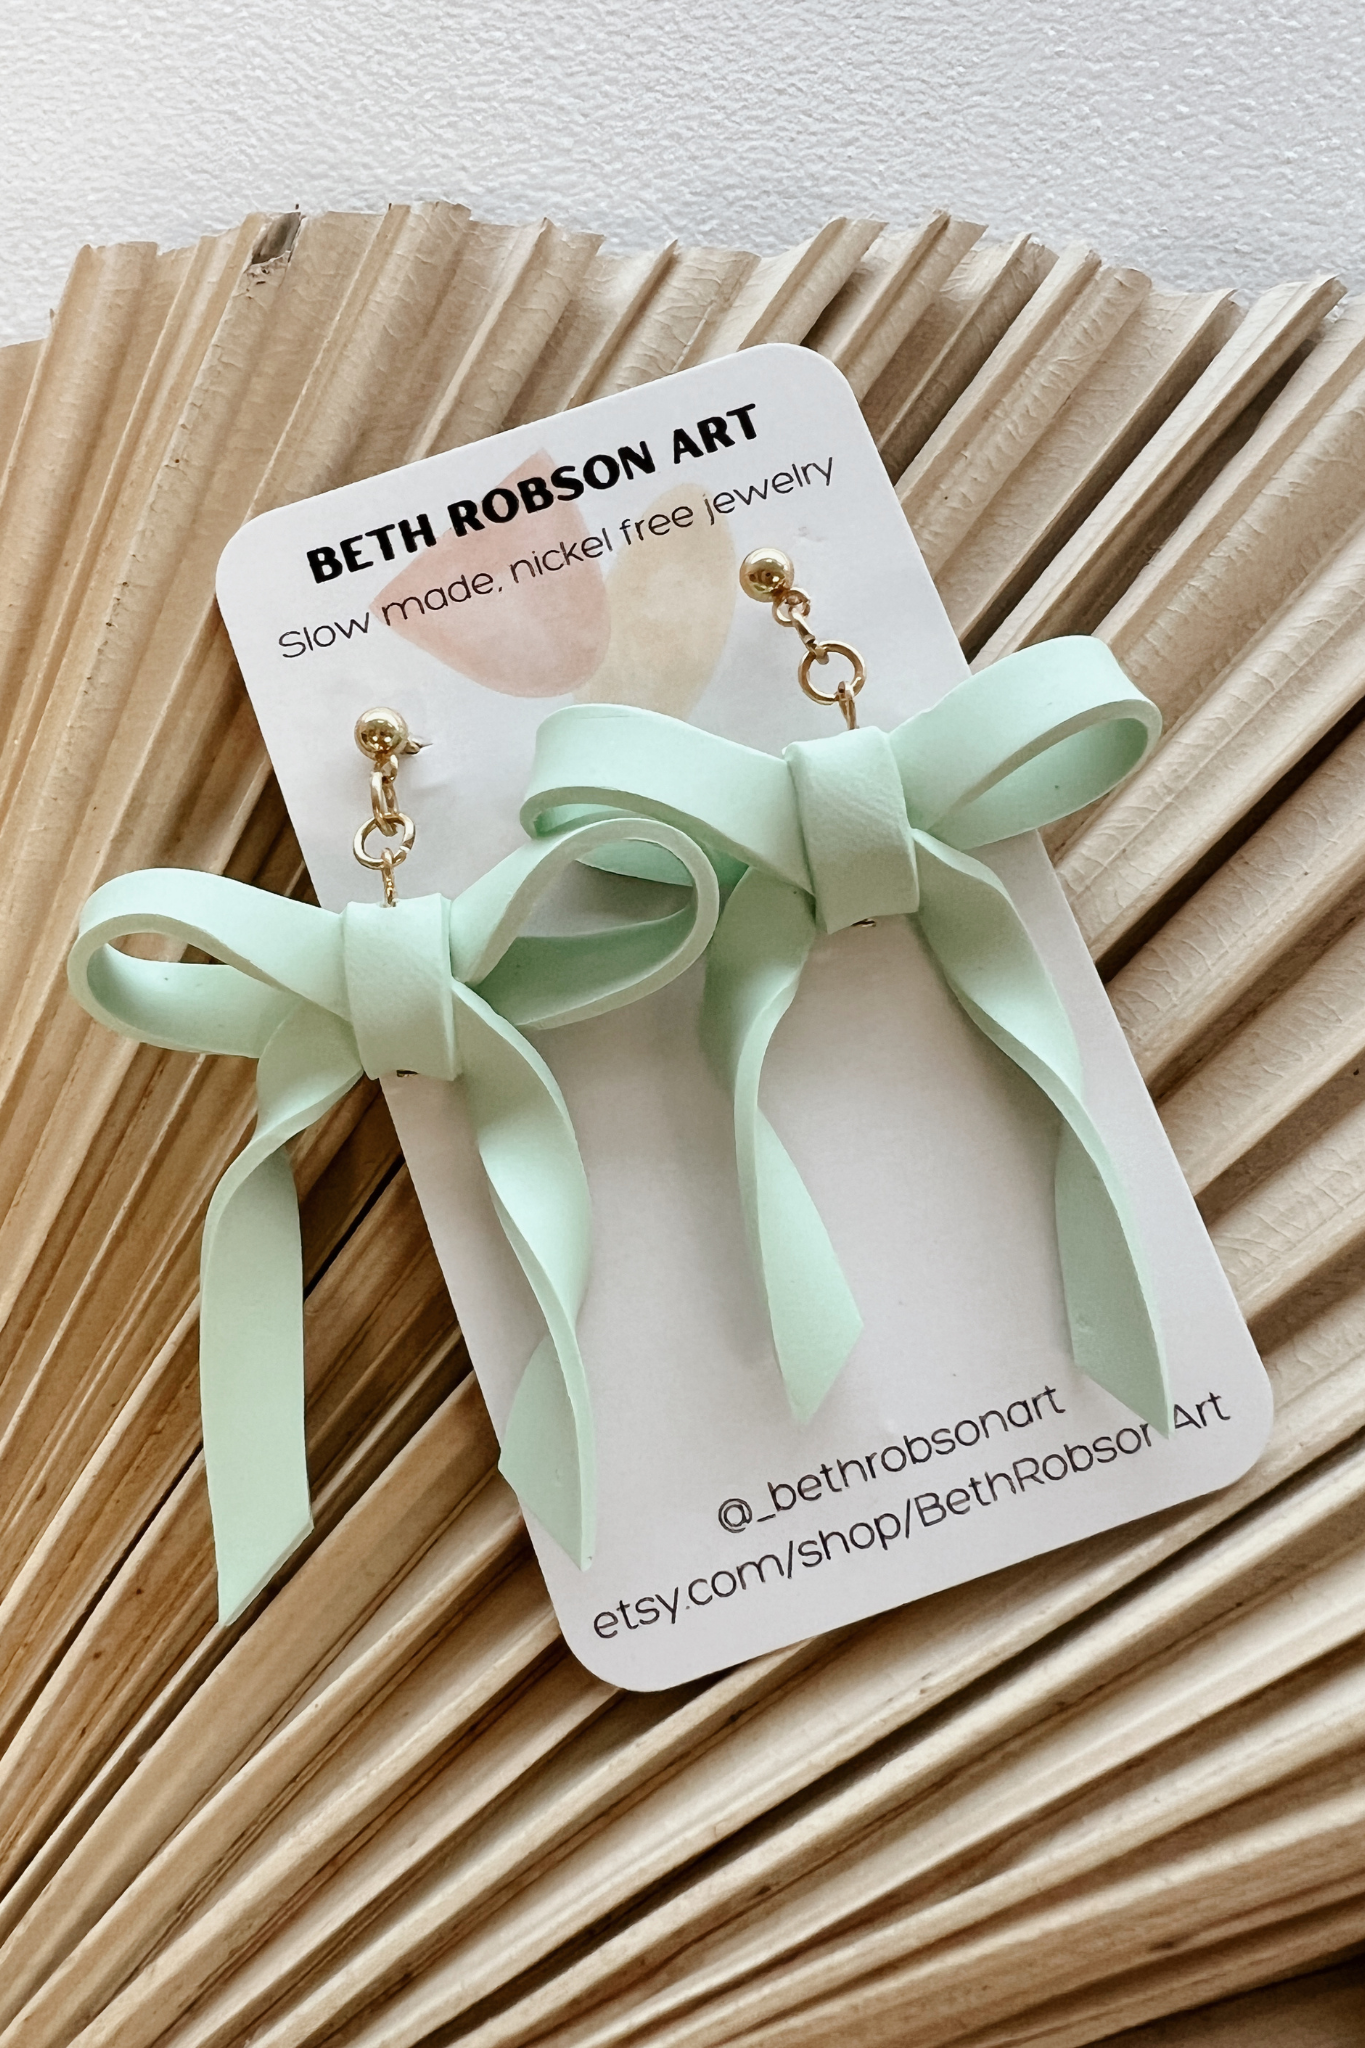 Beth Robson Art | Clay Bow Earrings | Sweetest Stitch Richmond 